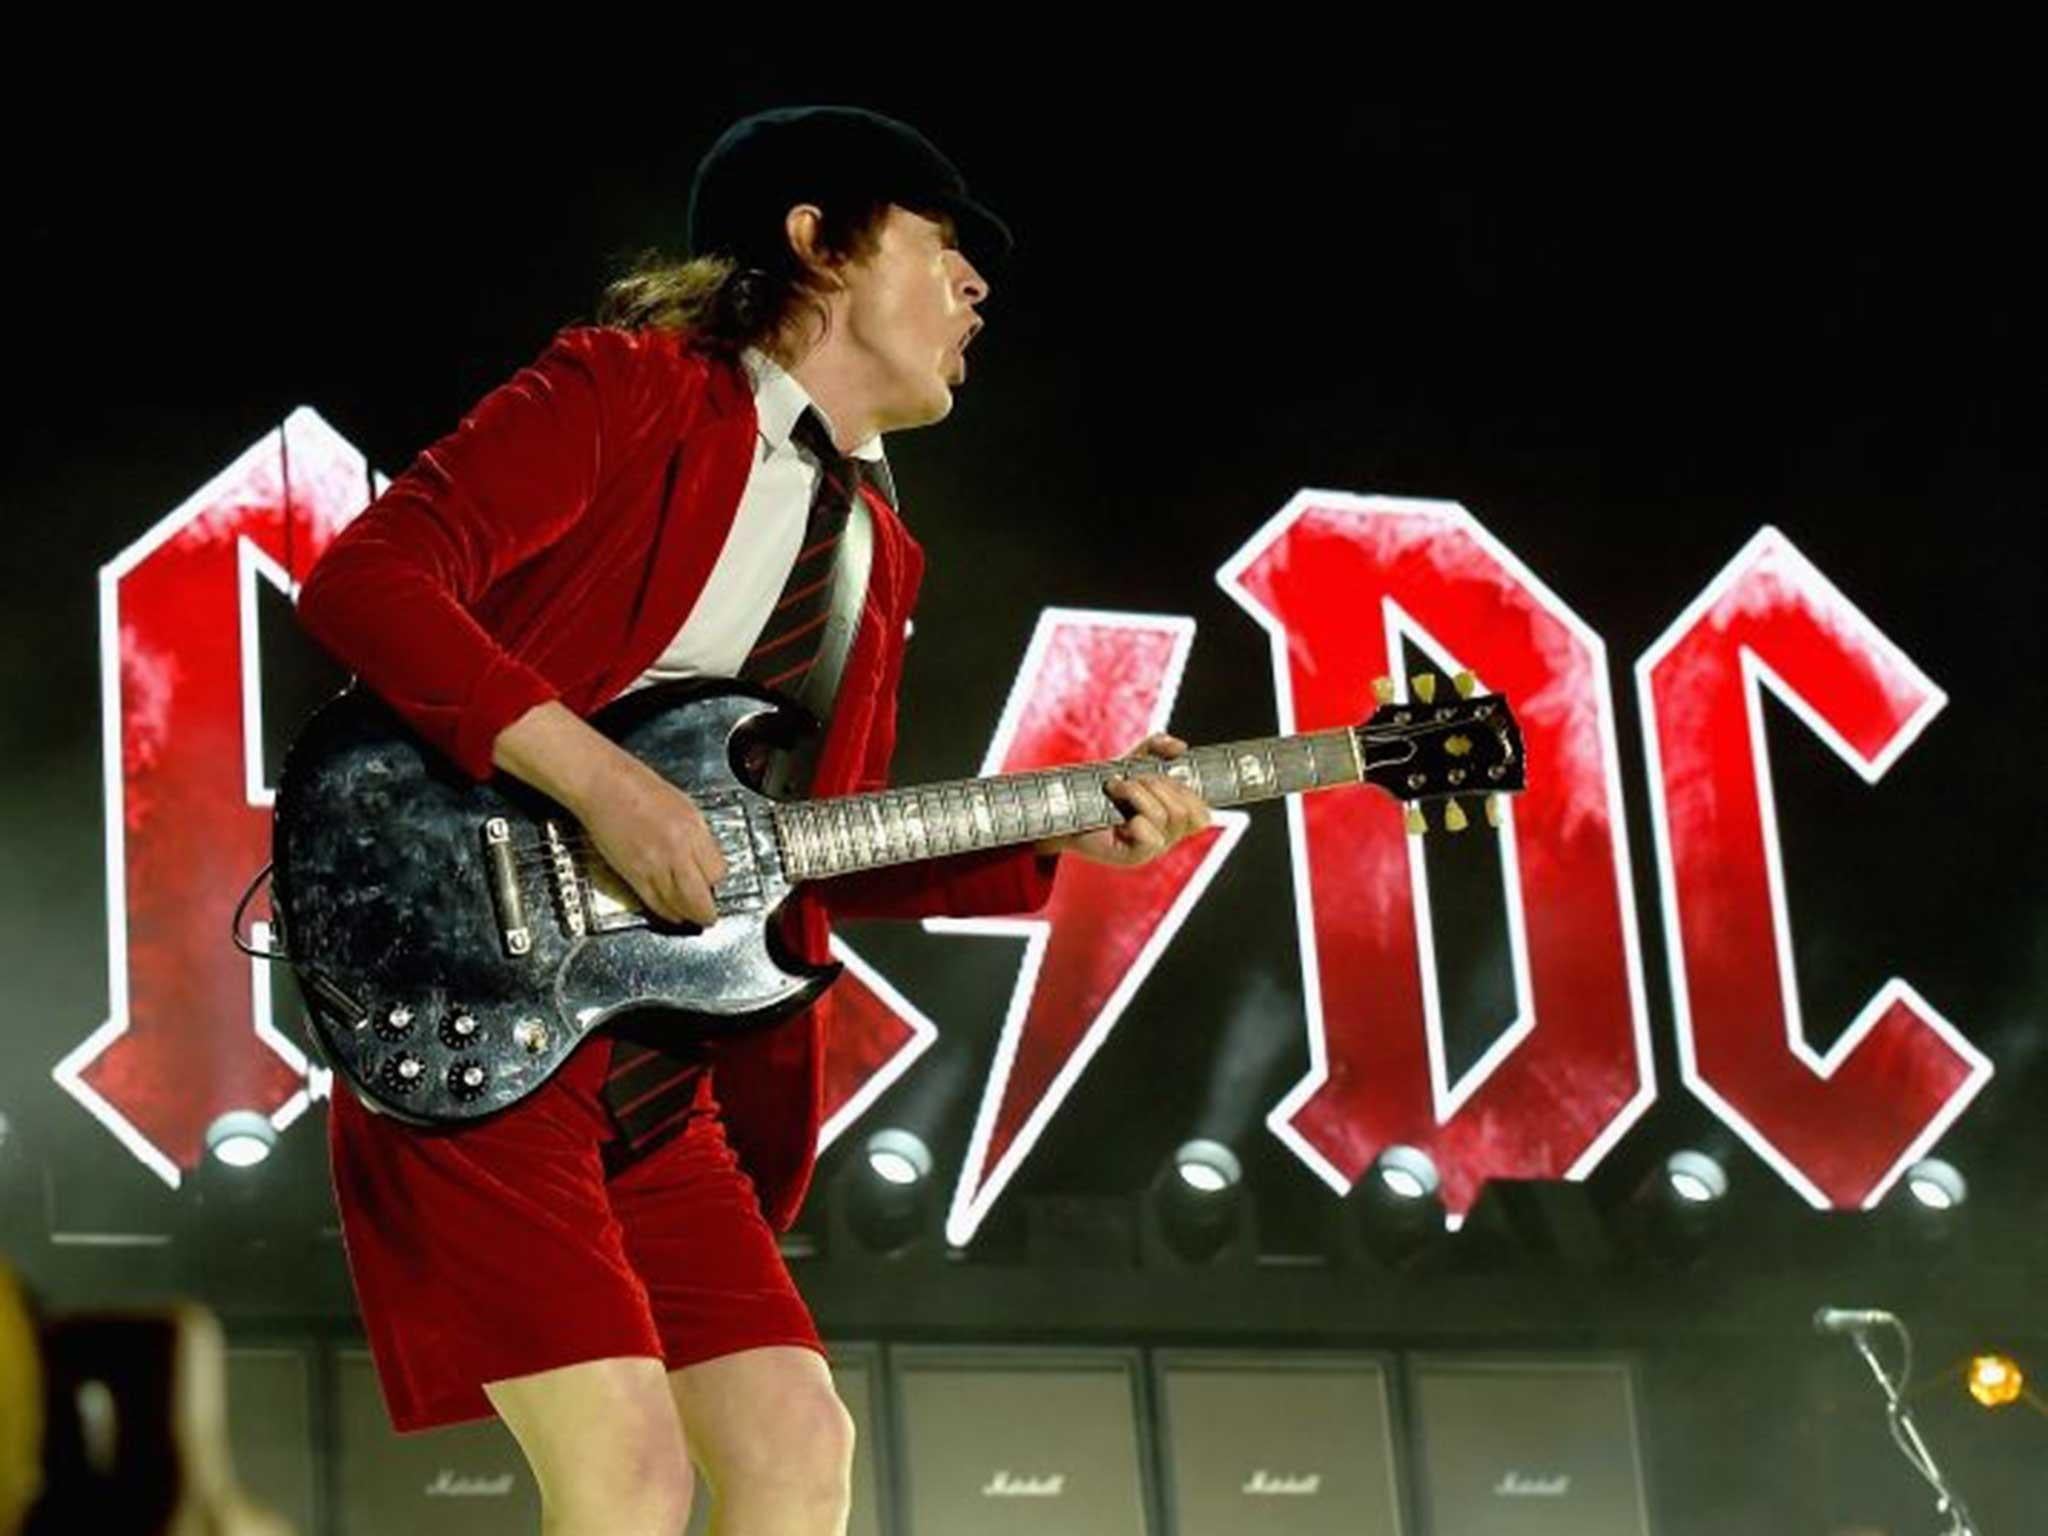 AC/DC performing at Coachella